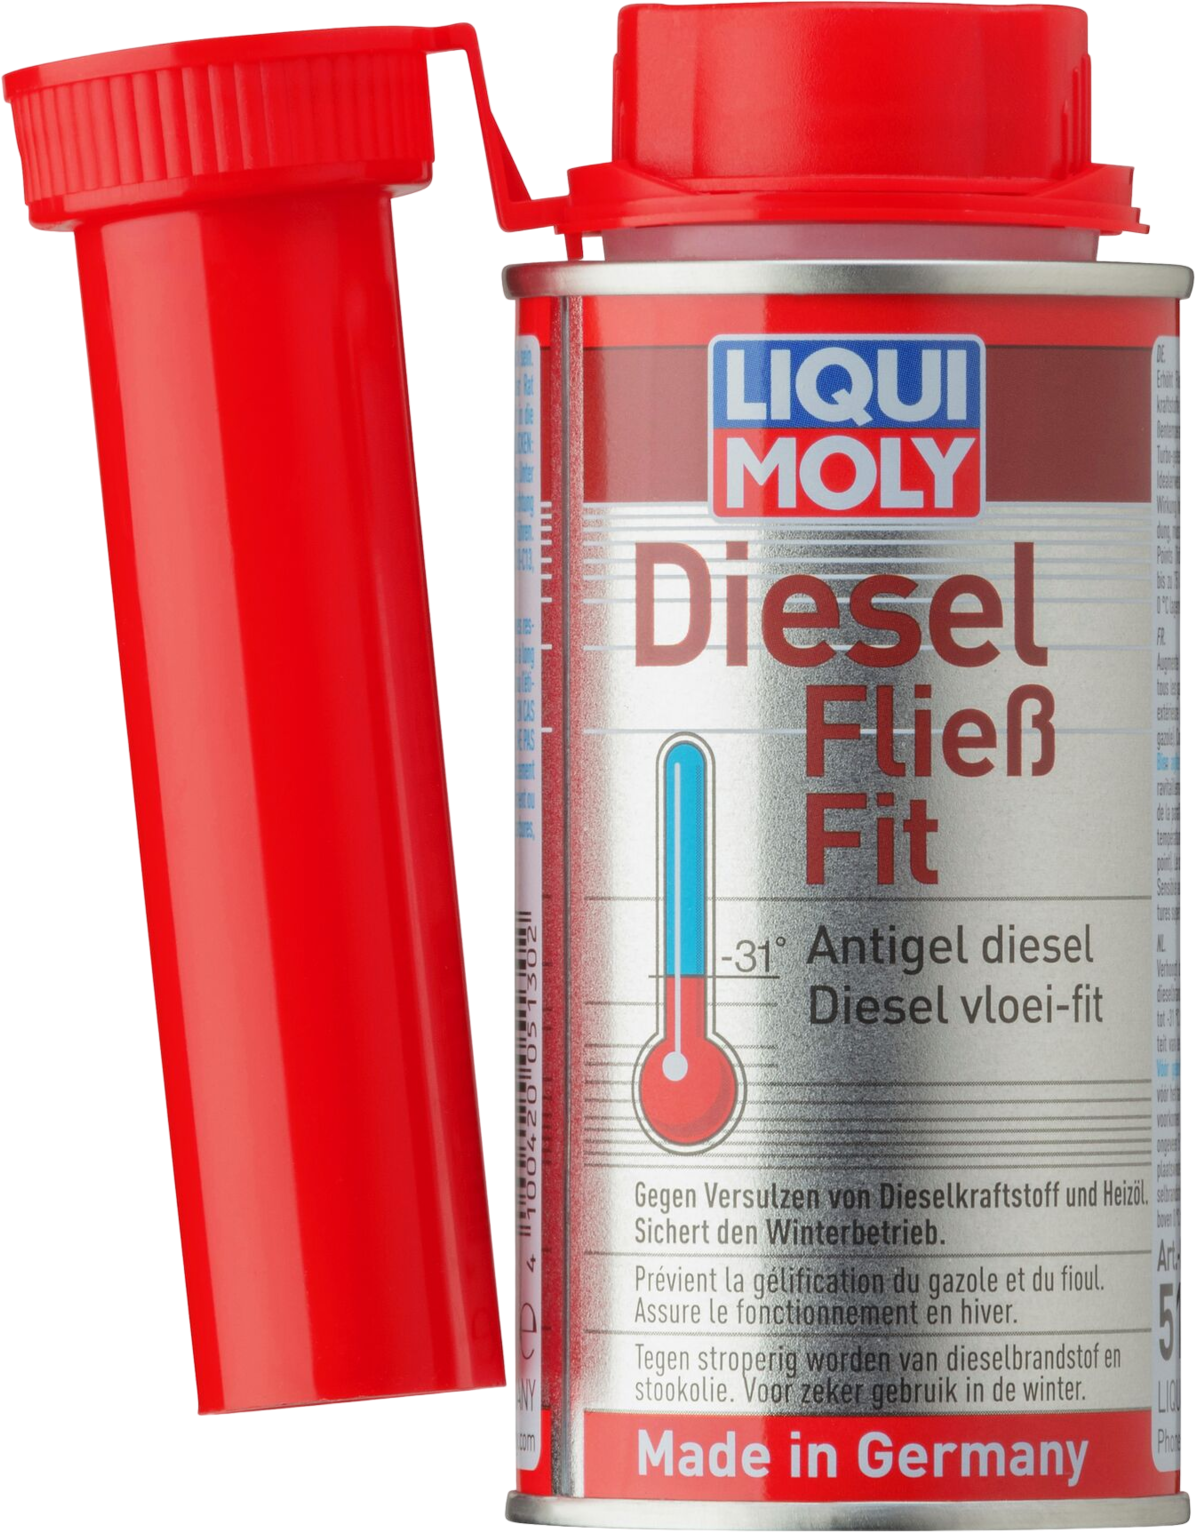 LM5130-150ML Verhoogt de vervloeibaarheid en filterbaarheid van de dieselbrandstof. Bruikbaar tot -31 °C.